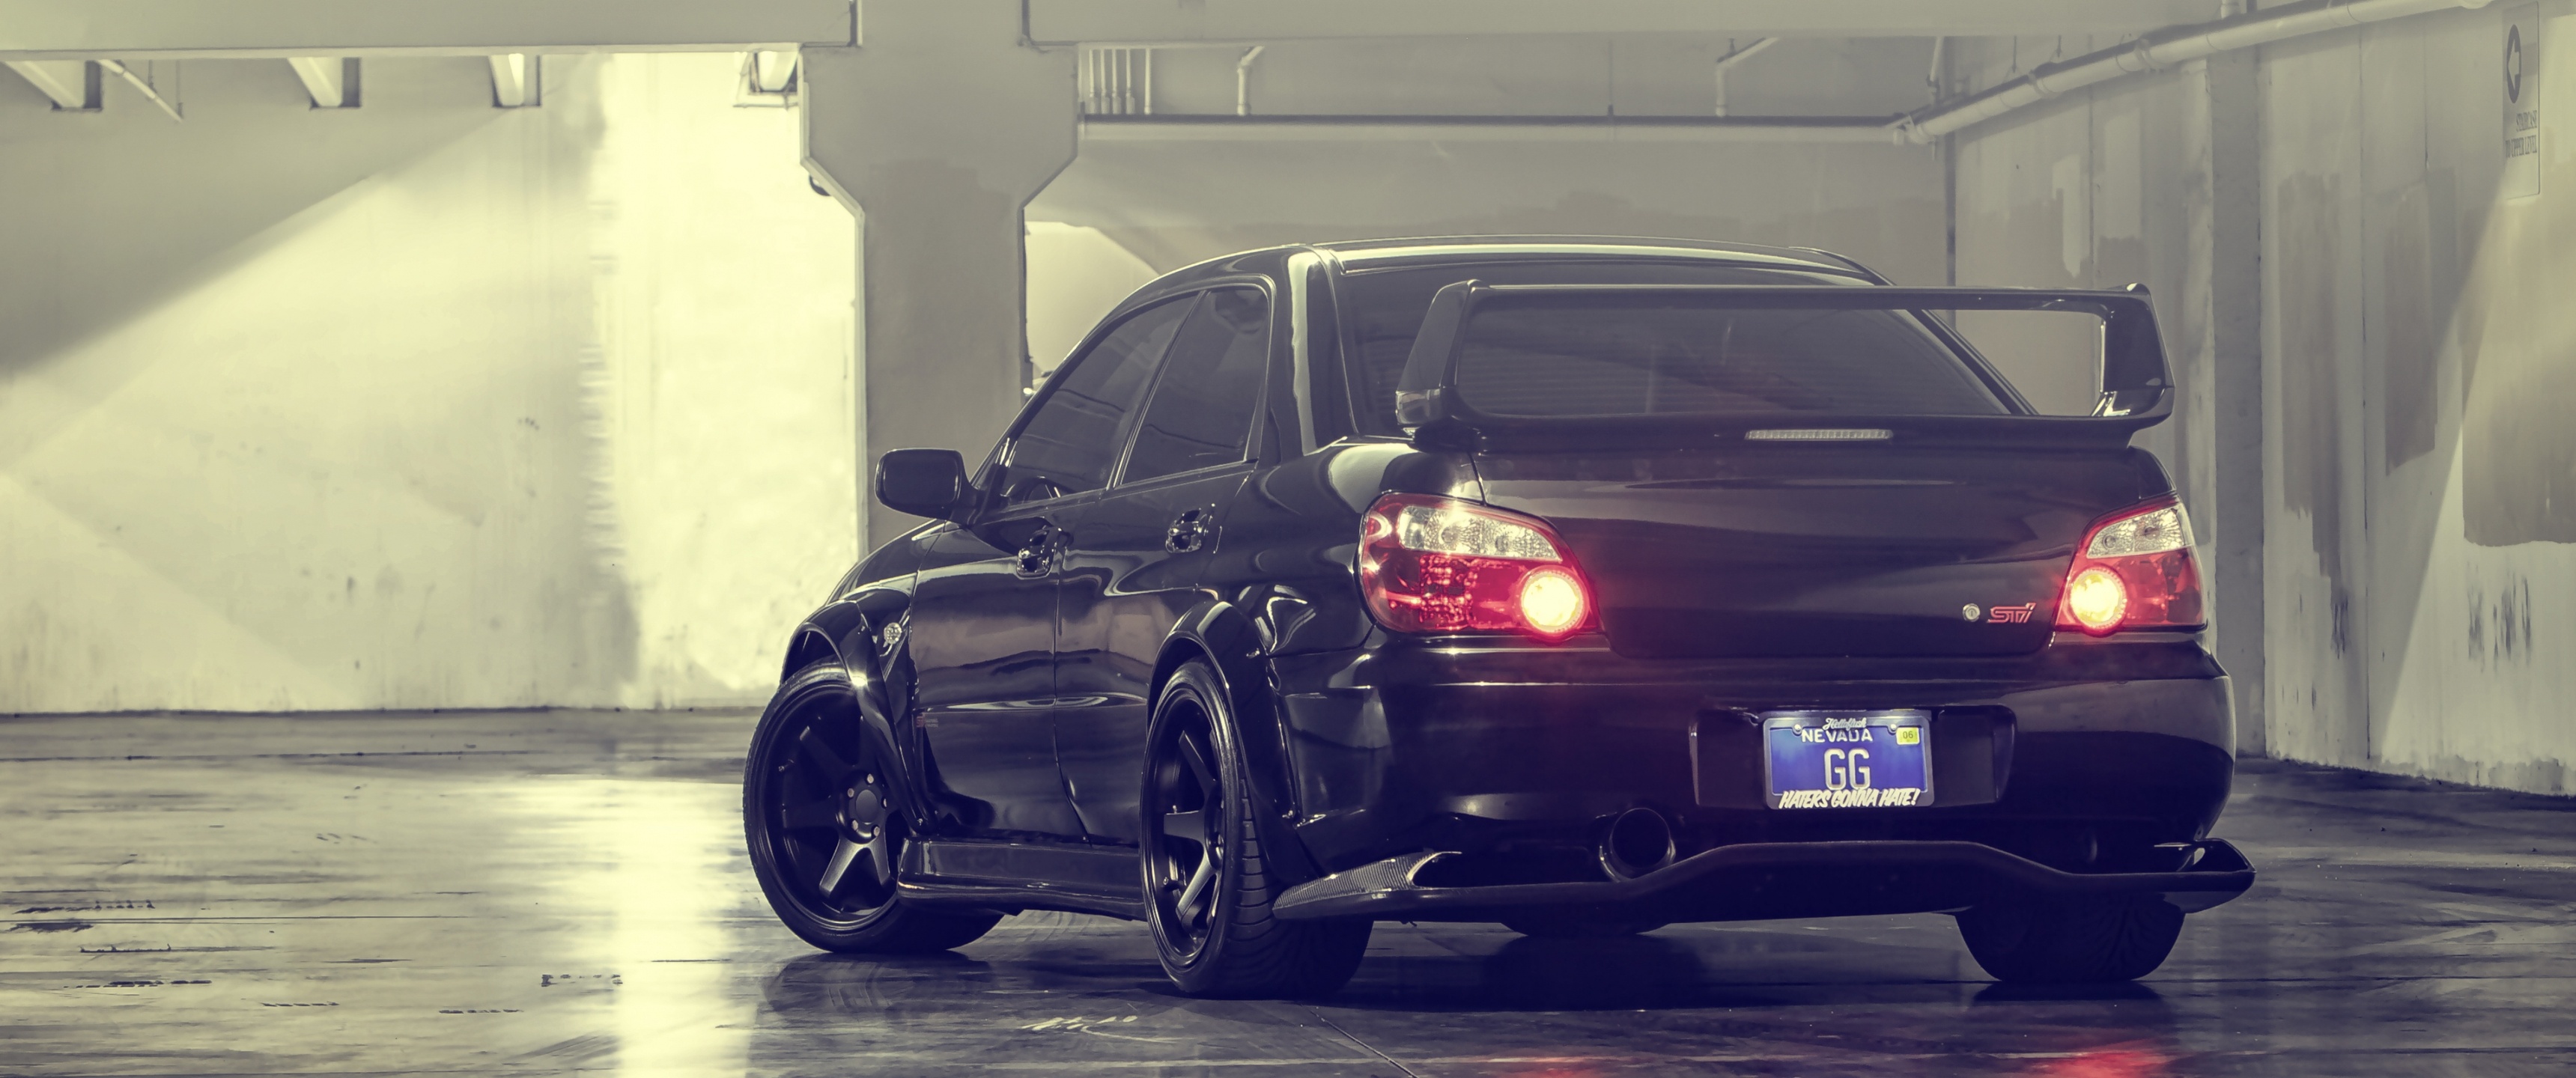 Subaru Impreza, Impreza STI, Black parking wallpaper, Download, 3440x1440 Dual Screen Desktop